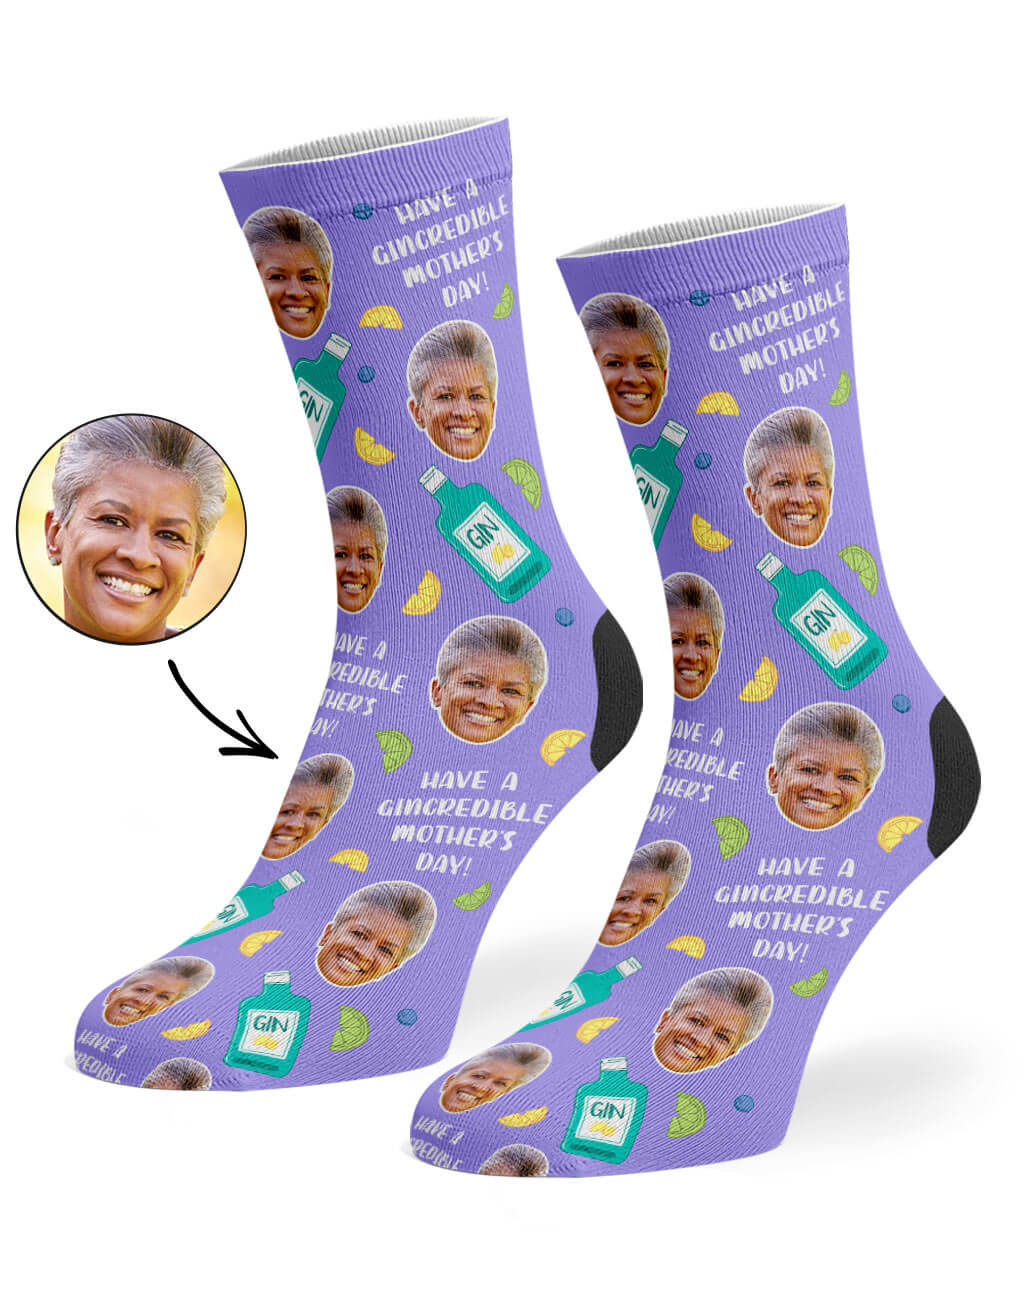 Gincredible Mother's Day Custom Socks